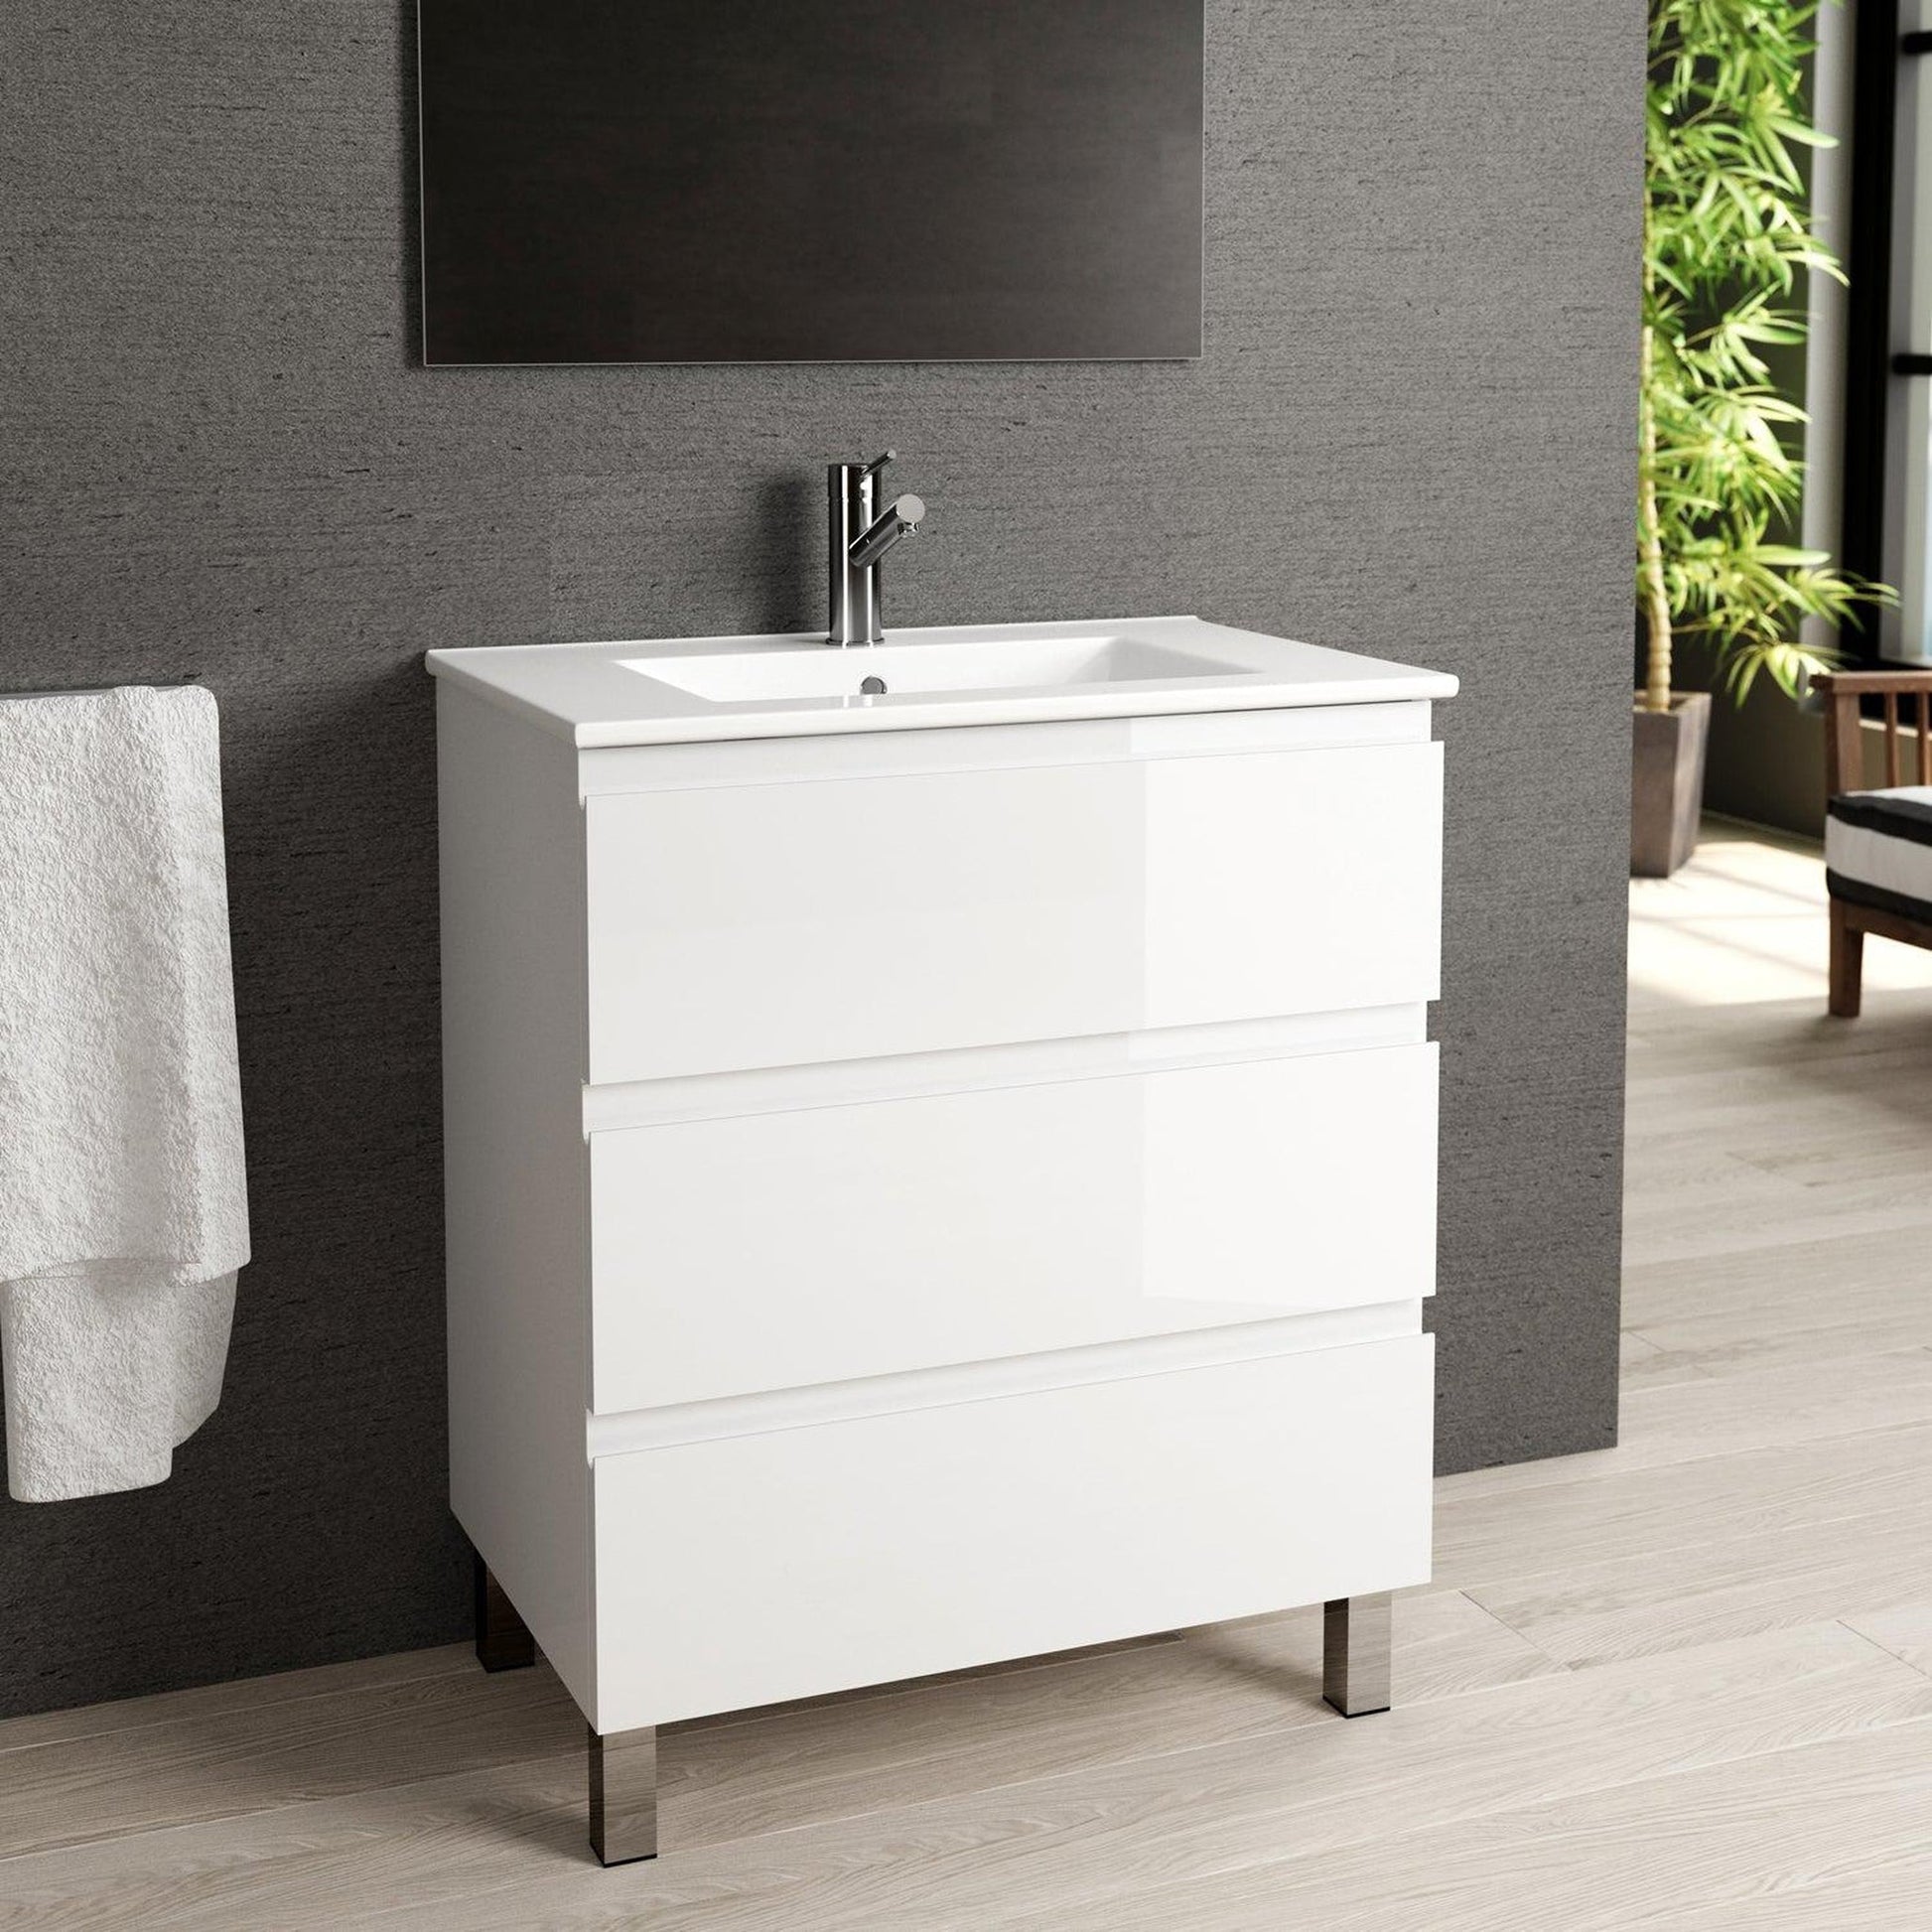 Eviva Vigo 28" x 34" White Freestanding Bathroom Vanity With White Integrated Porcelain Sink